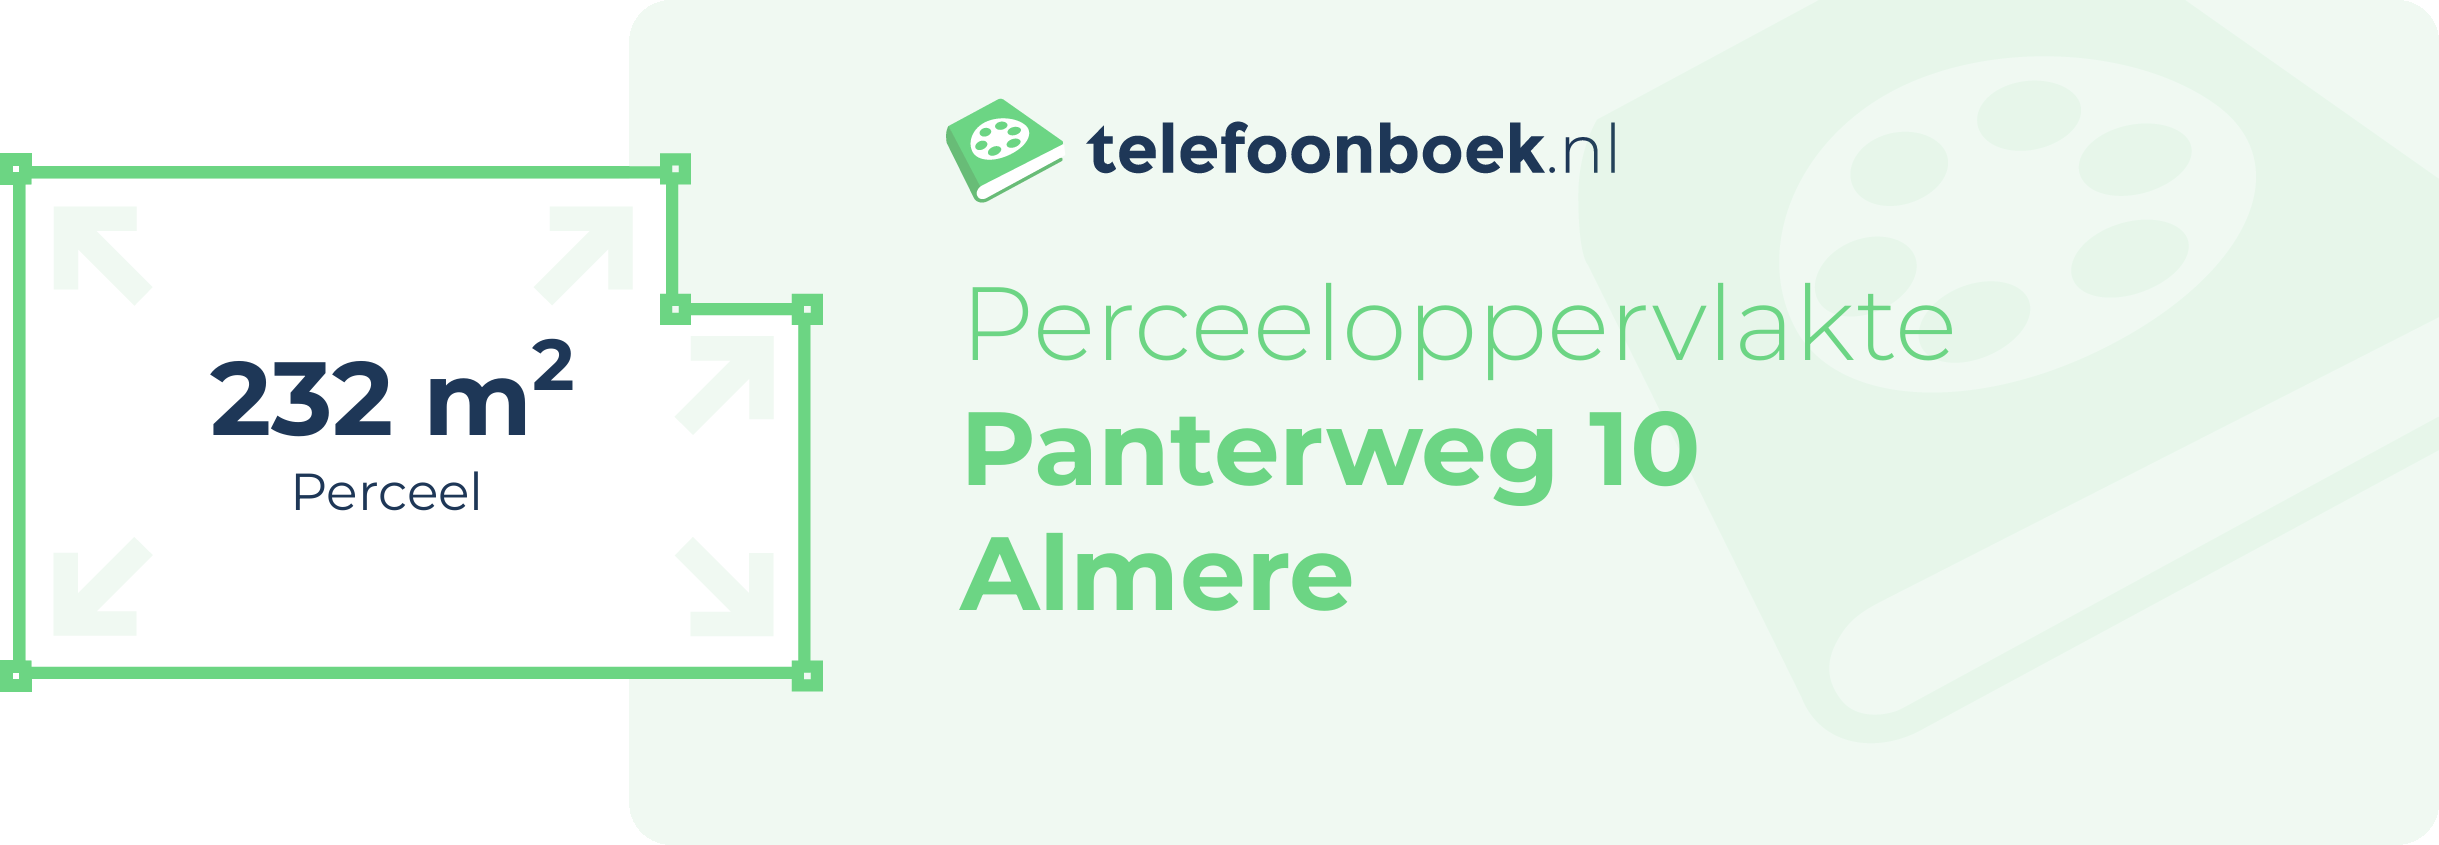 Perceeloppervlakte Panterweg 10 Almere